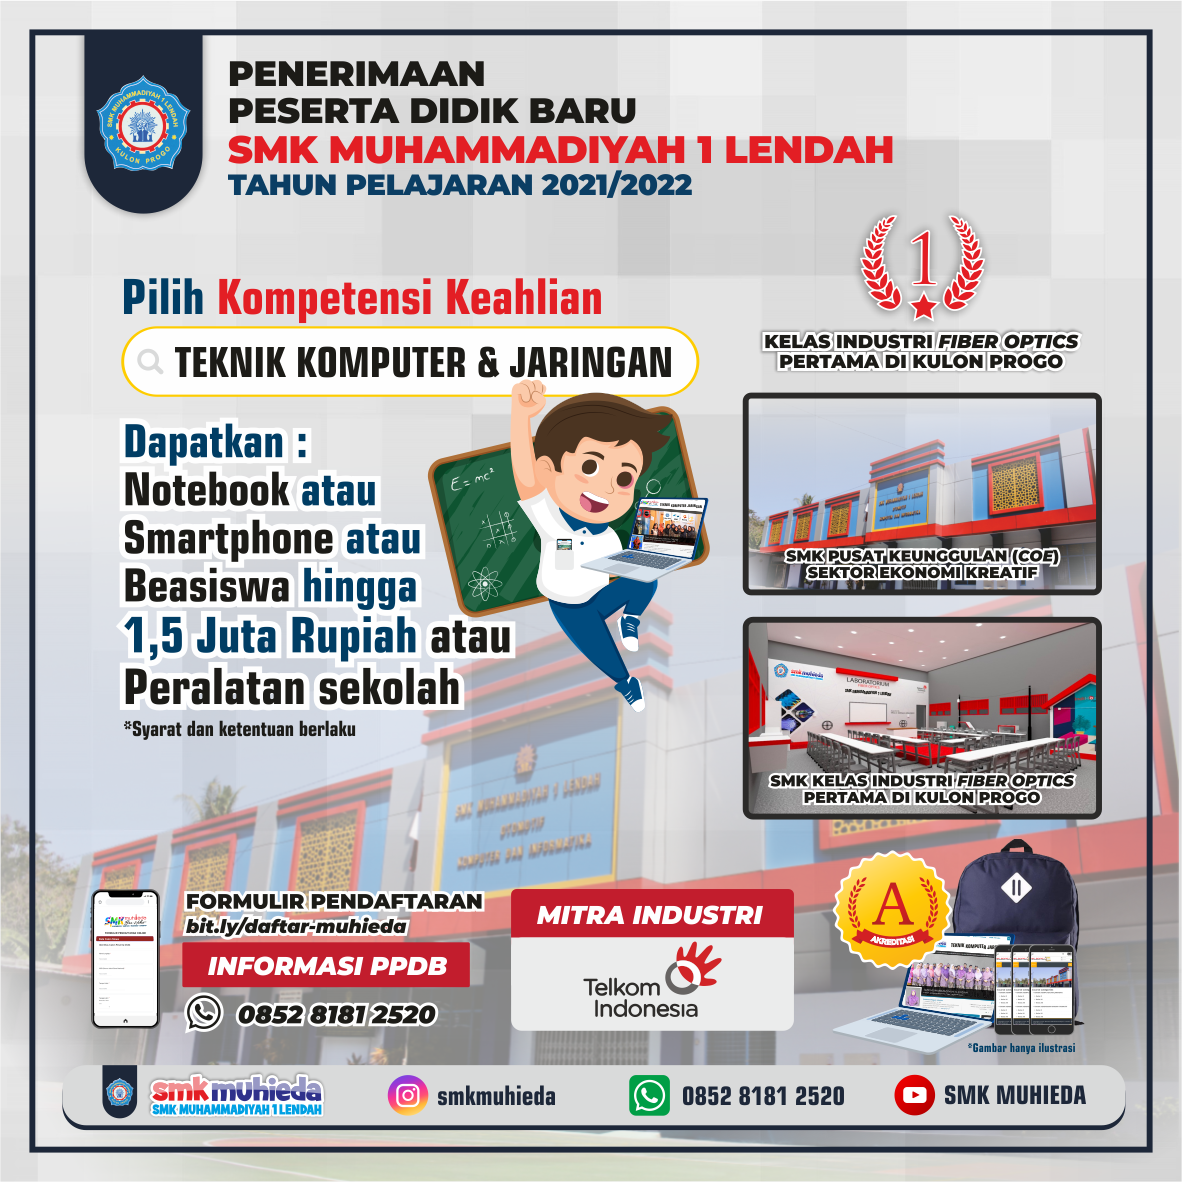 Kelas Industri Fiber Optik PT. Telkom pertama di Kulon Progo Yogyakarta